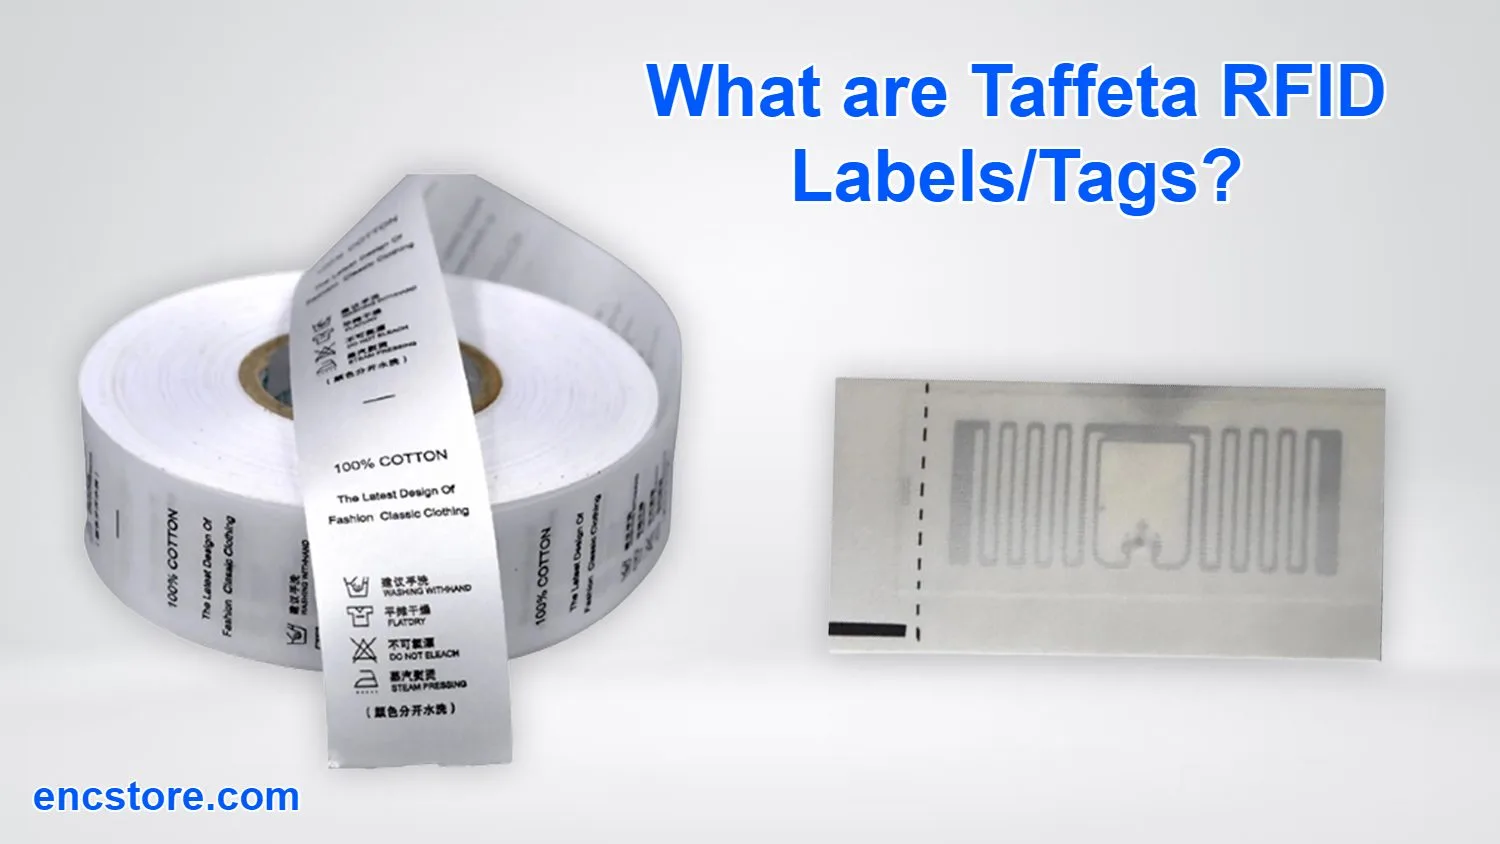  Taffeta RFID Labels